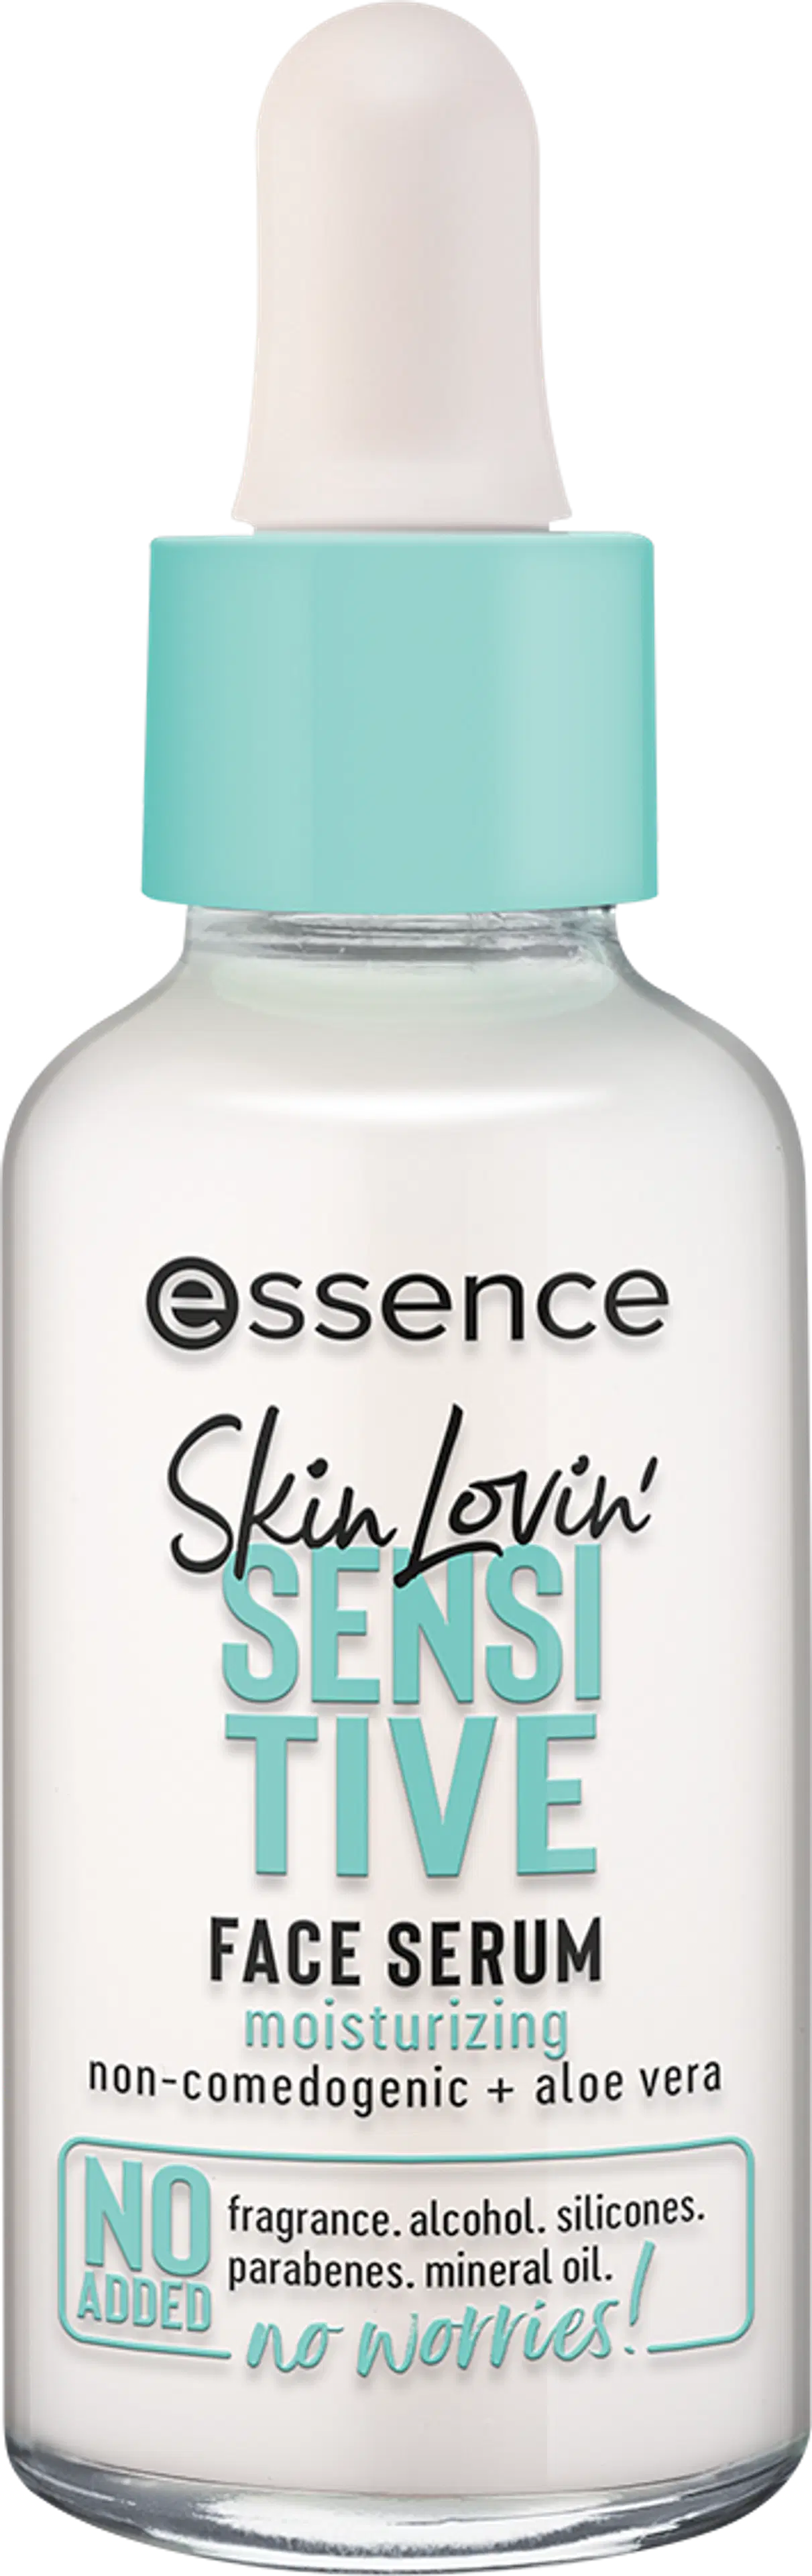 essence Skin Lovin' SENSITIVE FACE SERUM kasvoseerumi 30 ml